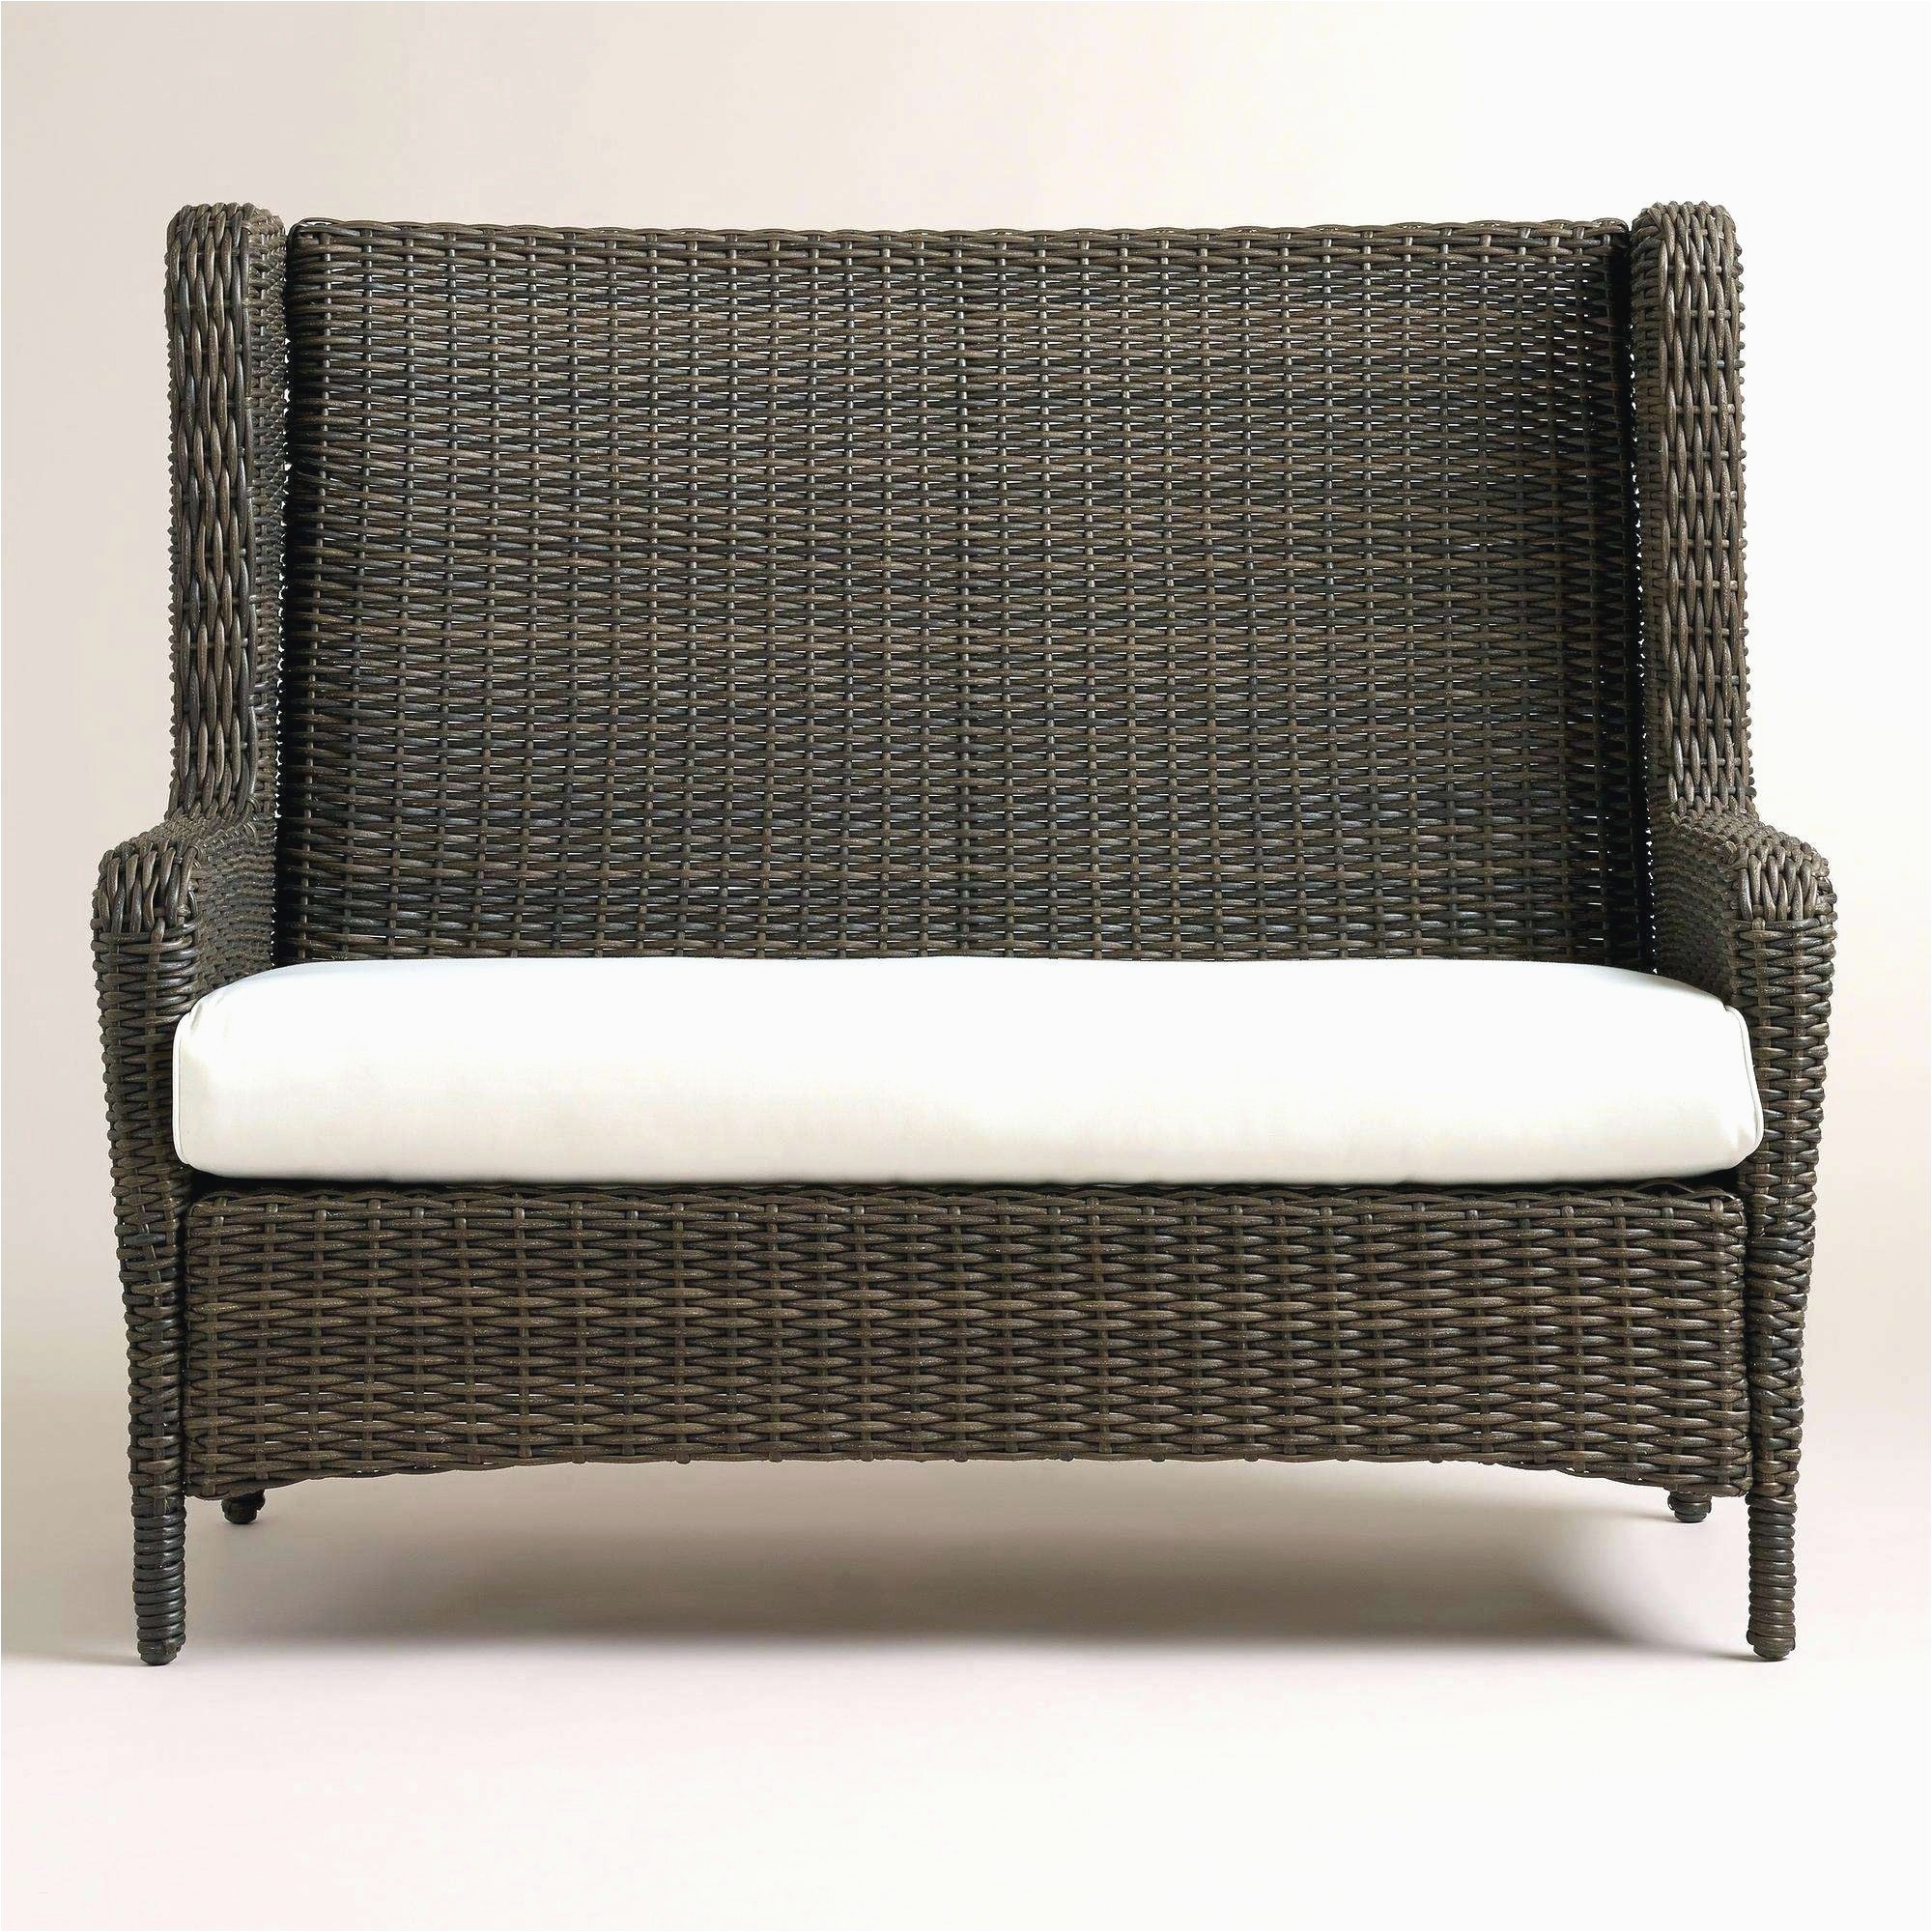 bobs outdoor furniture best outdoor bench plans beautiful wicker outdoor sofa 0d patio chairs